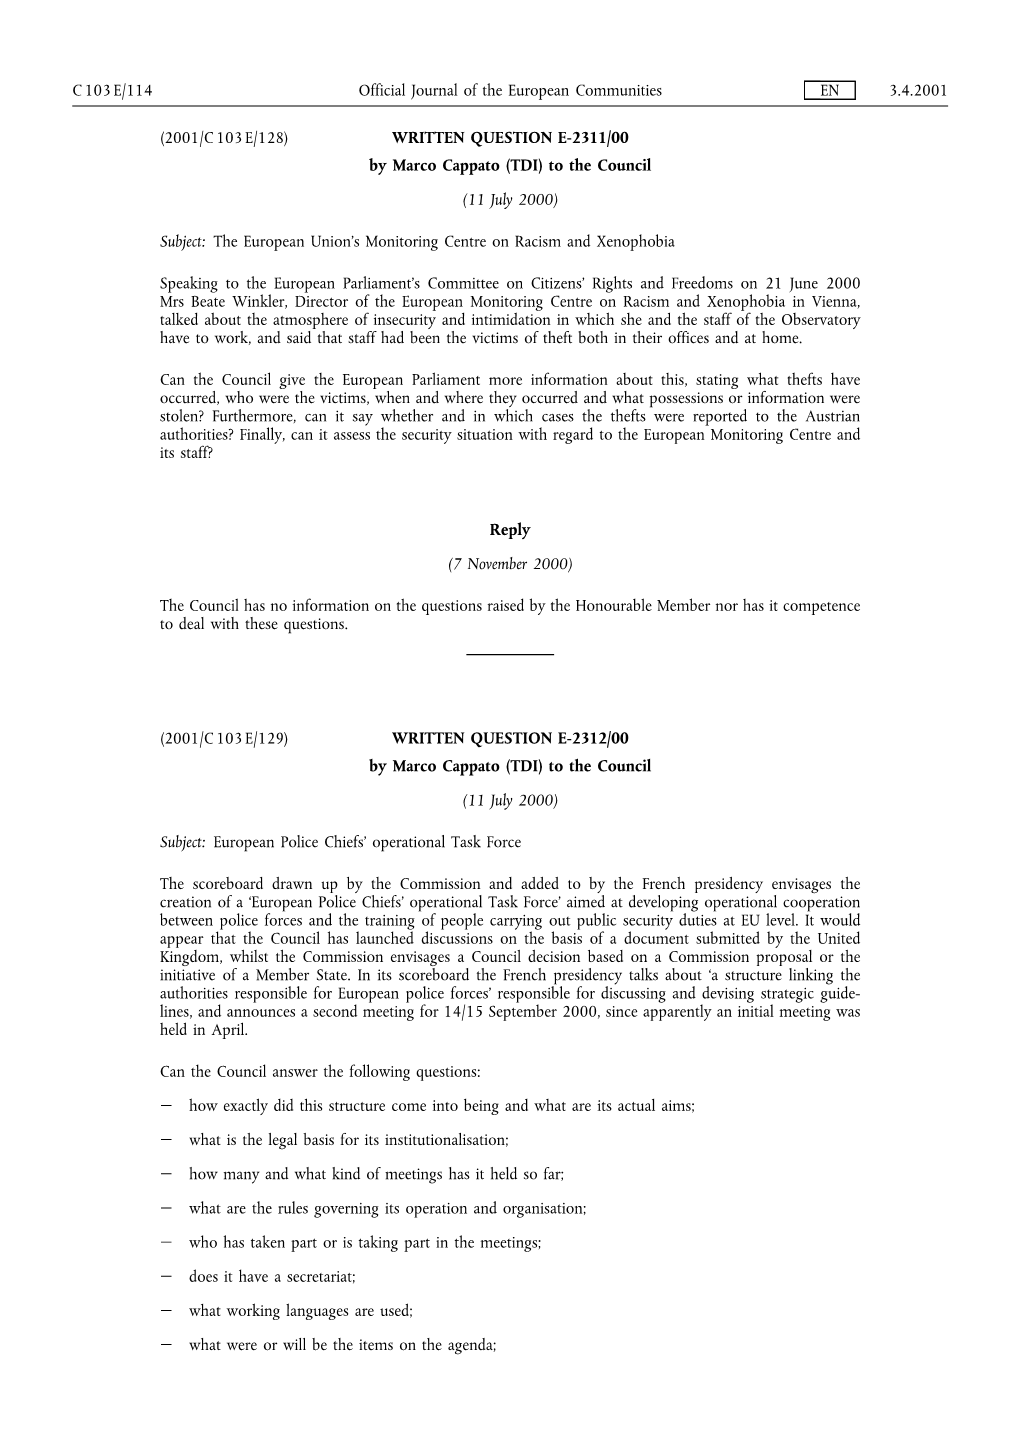 (2001/C 103 E/128) WRITTEN QUESTION E-2311/00 by Marco Cappato (TDI) to the Council